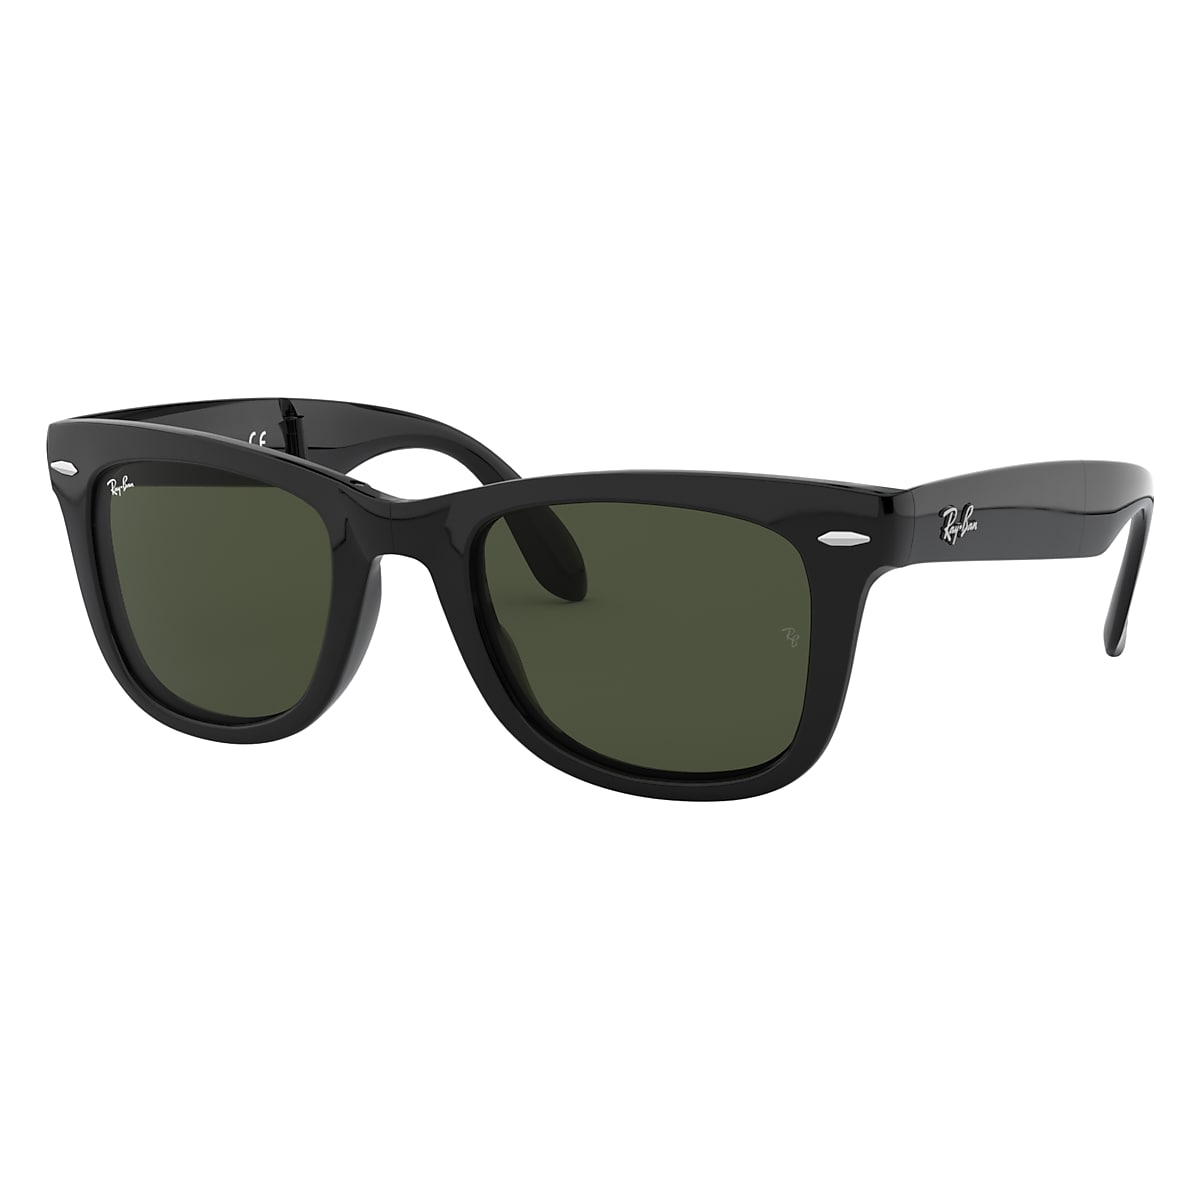 WAYFARER FOLDING CLASSIC Sunglasses in Black and Green - RB4105 